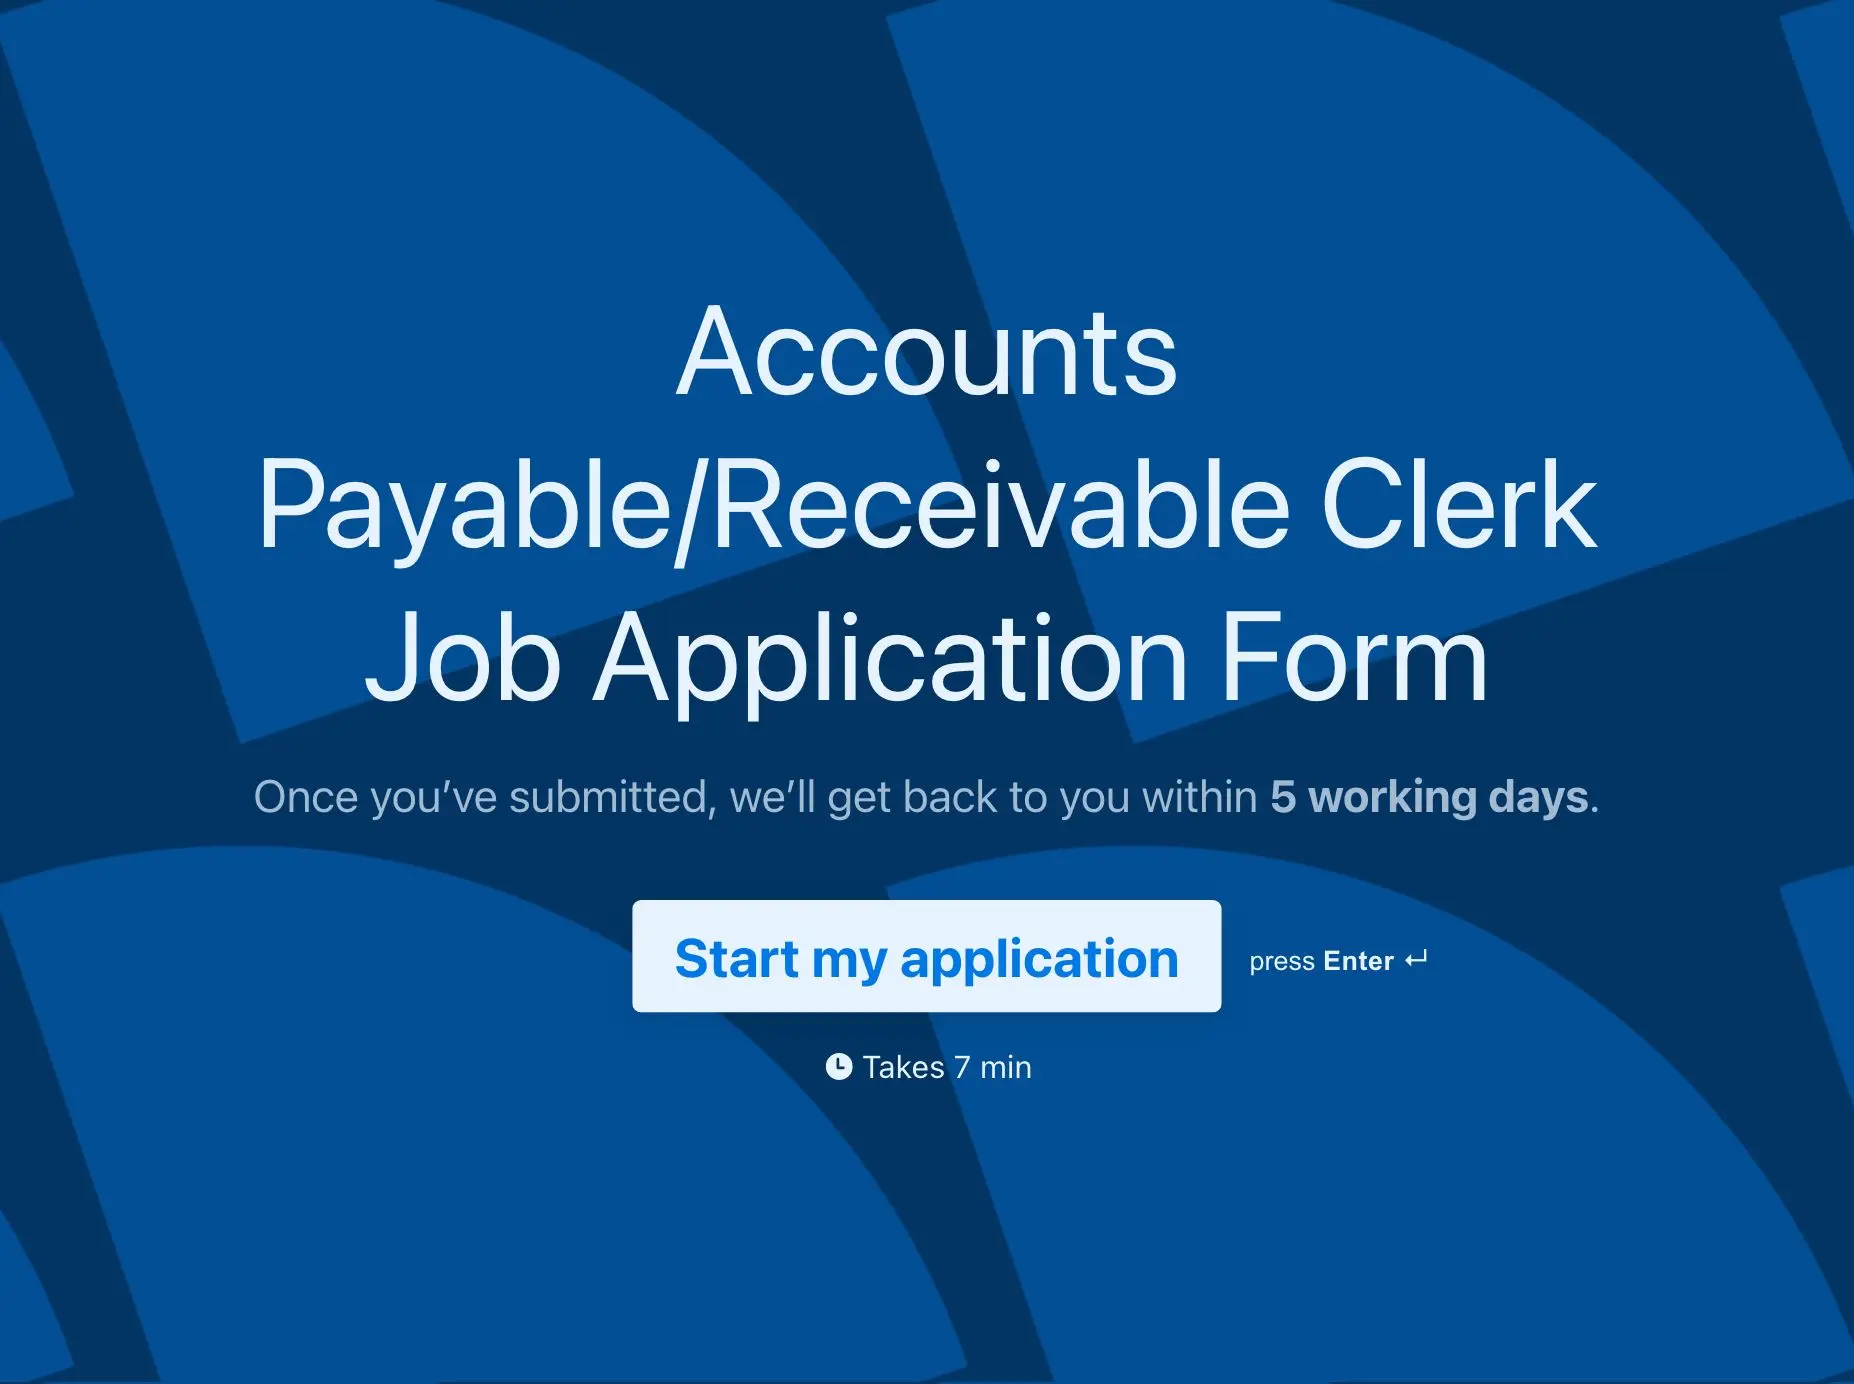 Accounts Payable/Receivable Clerk Job Application Form Template Hero